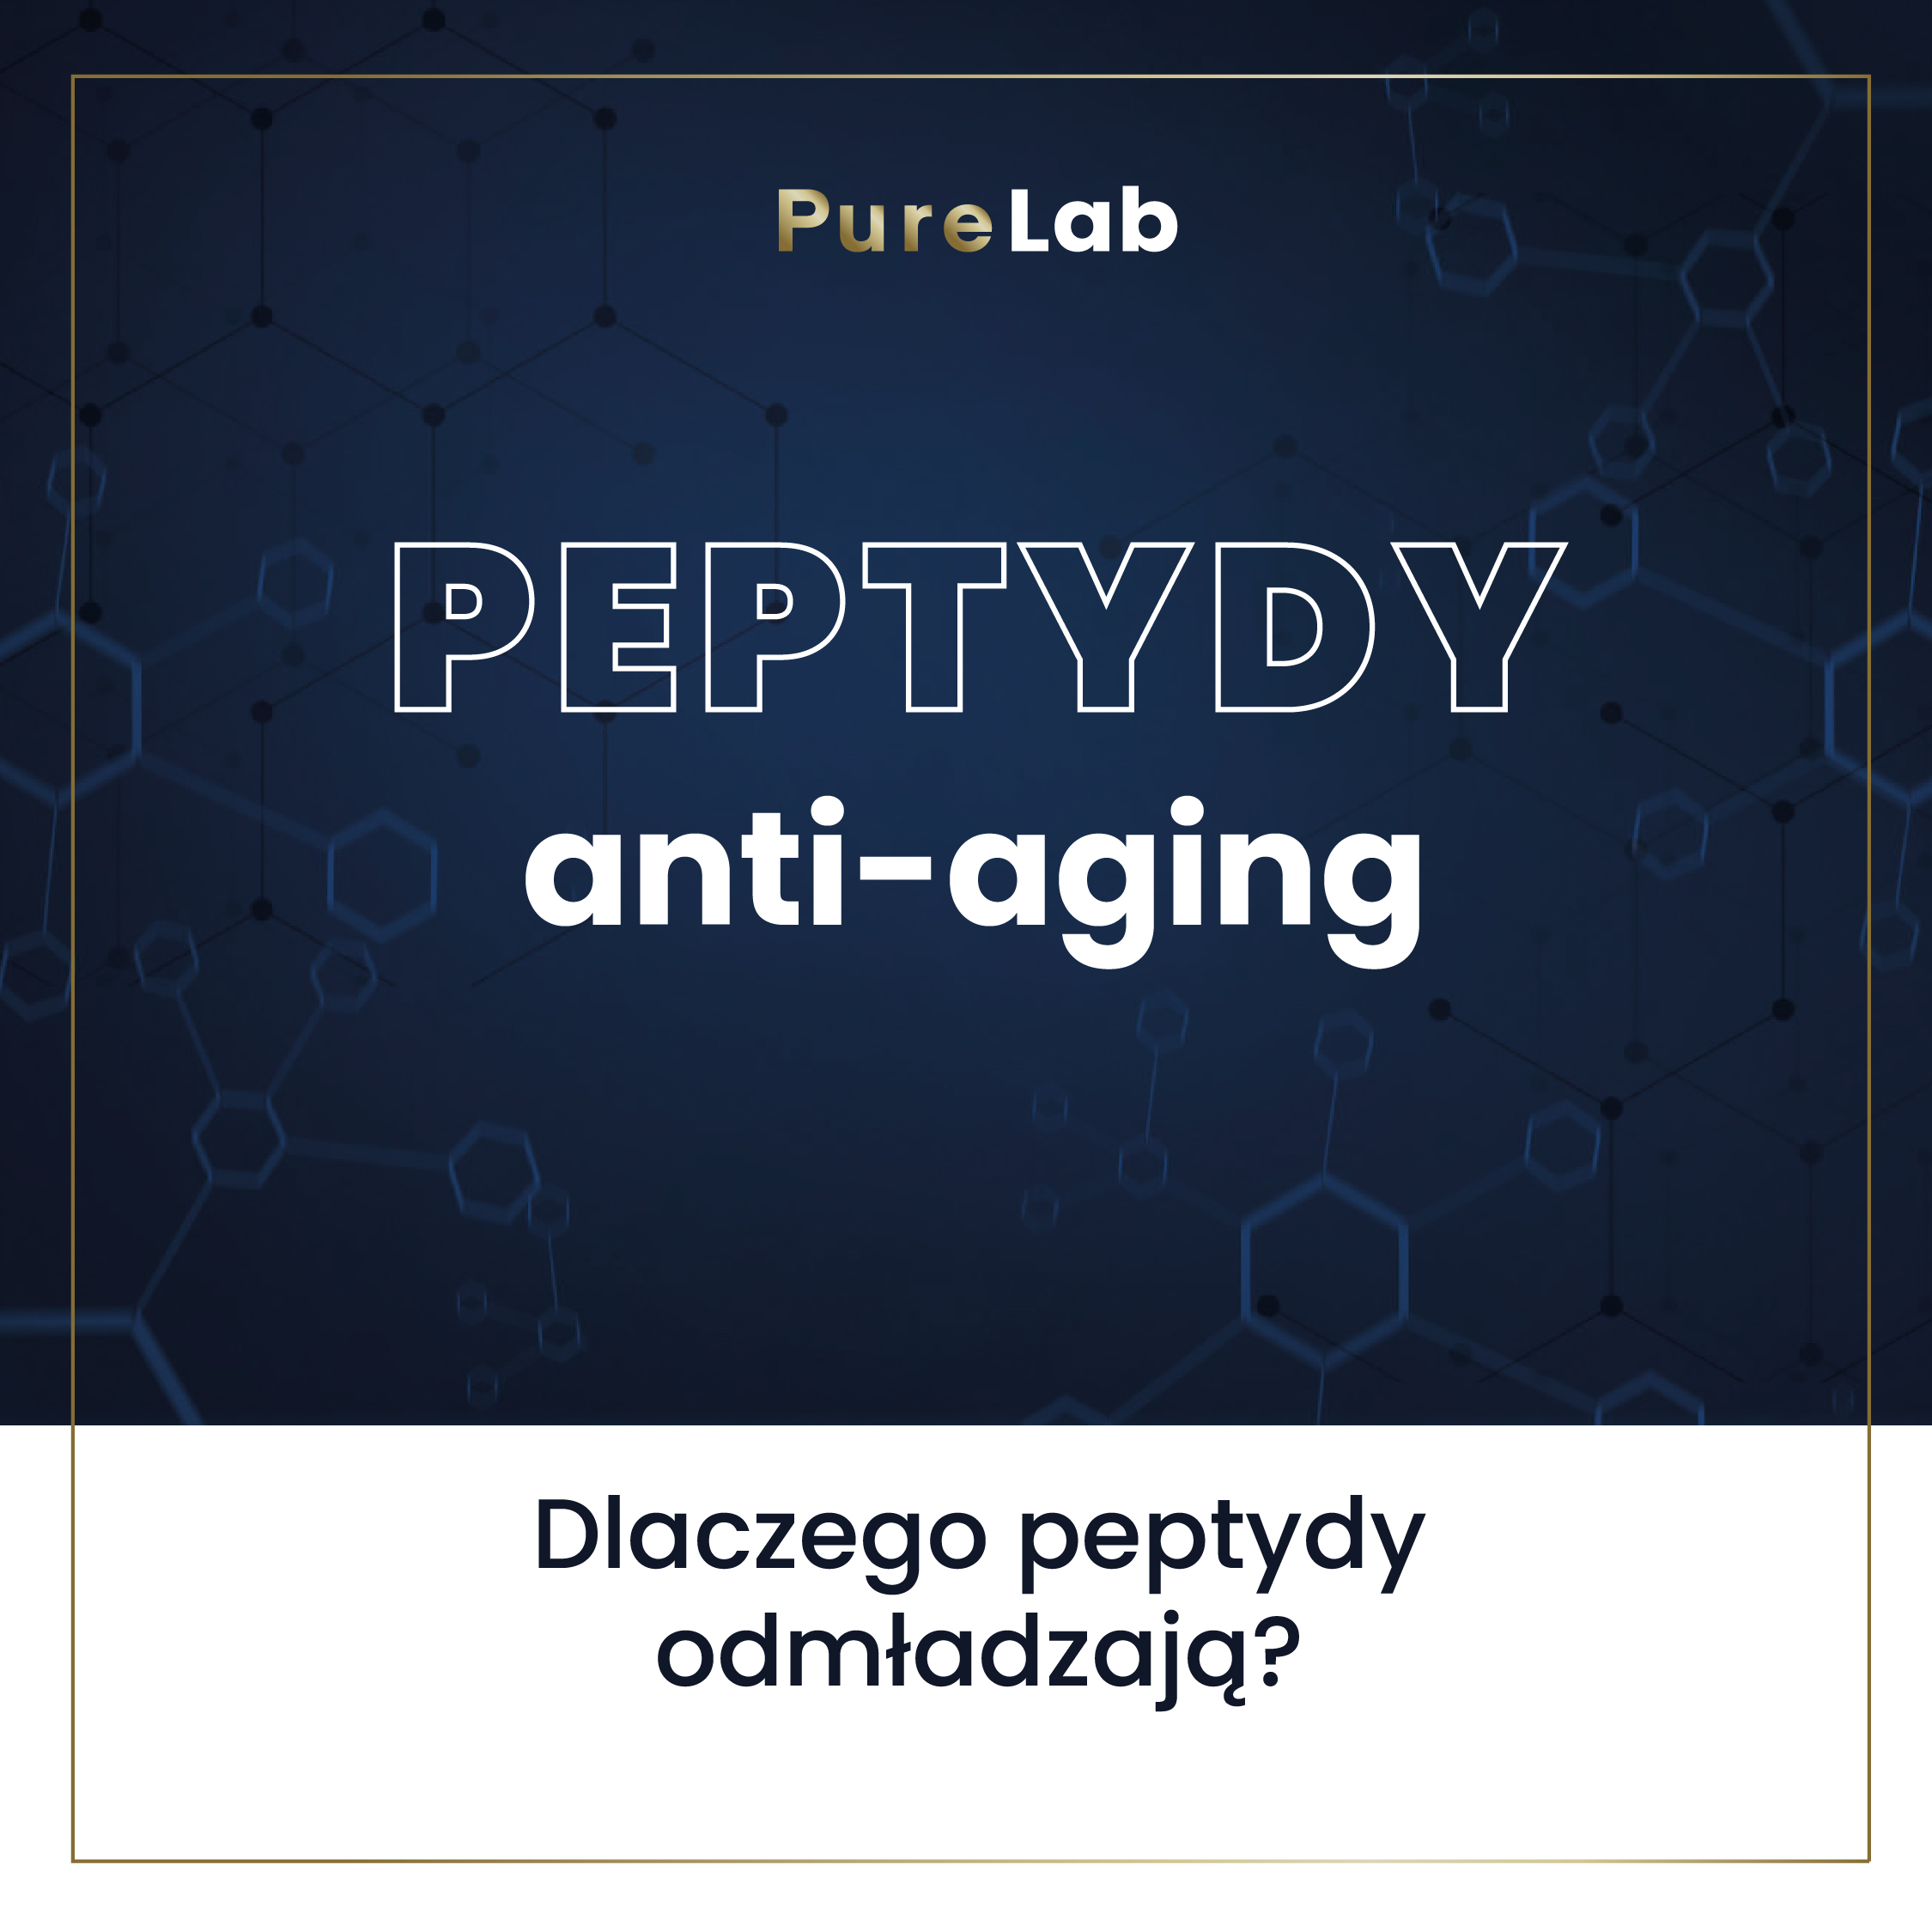 Peptydy anti-aging